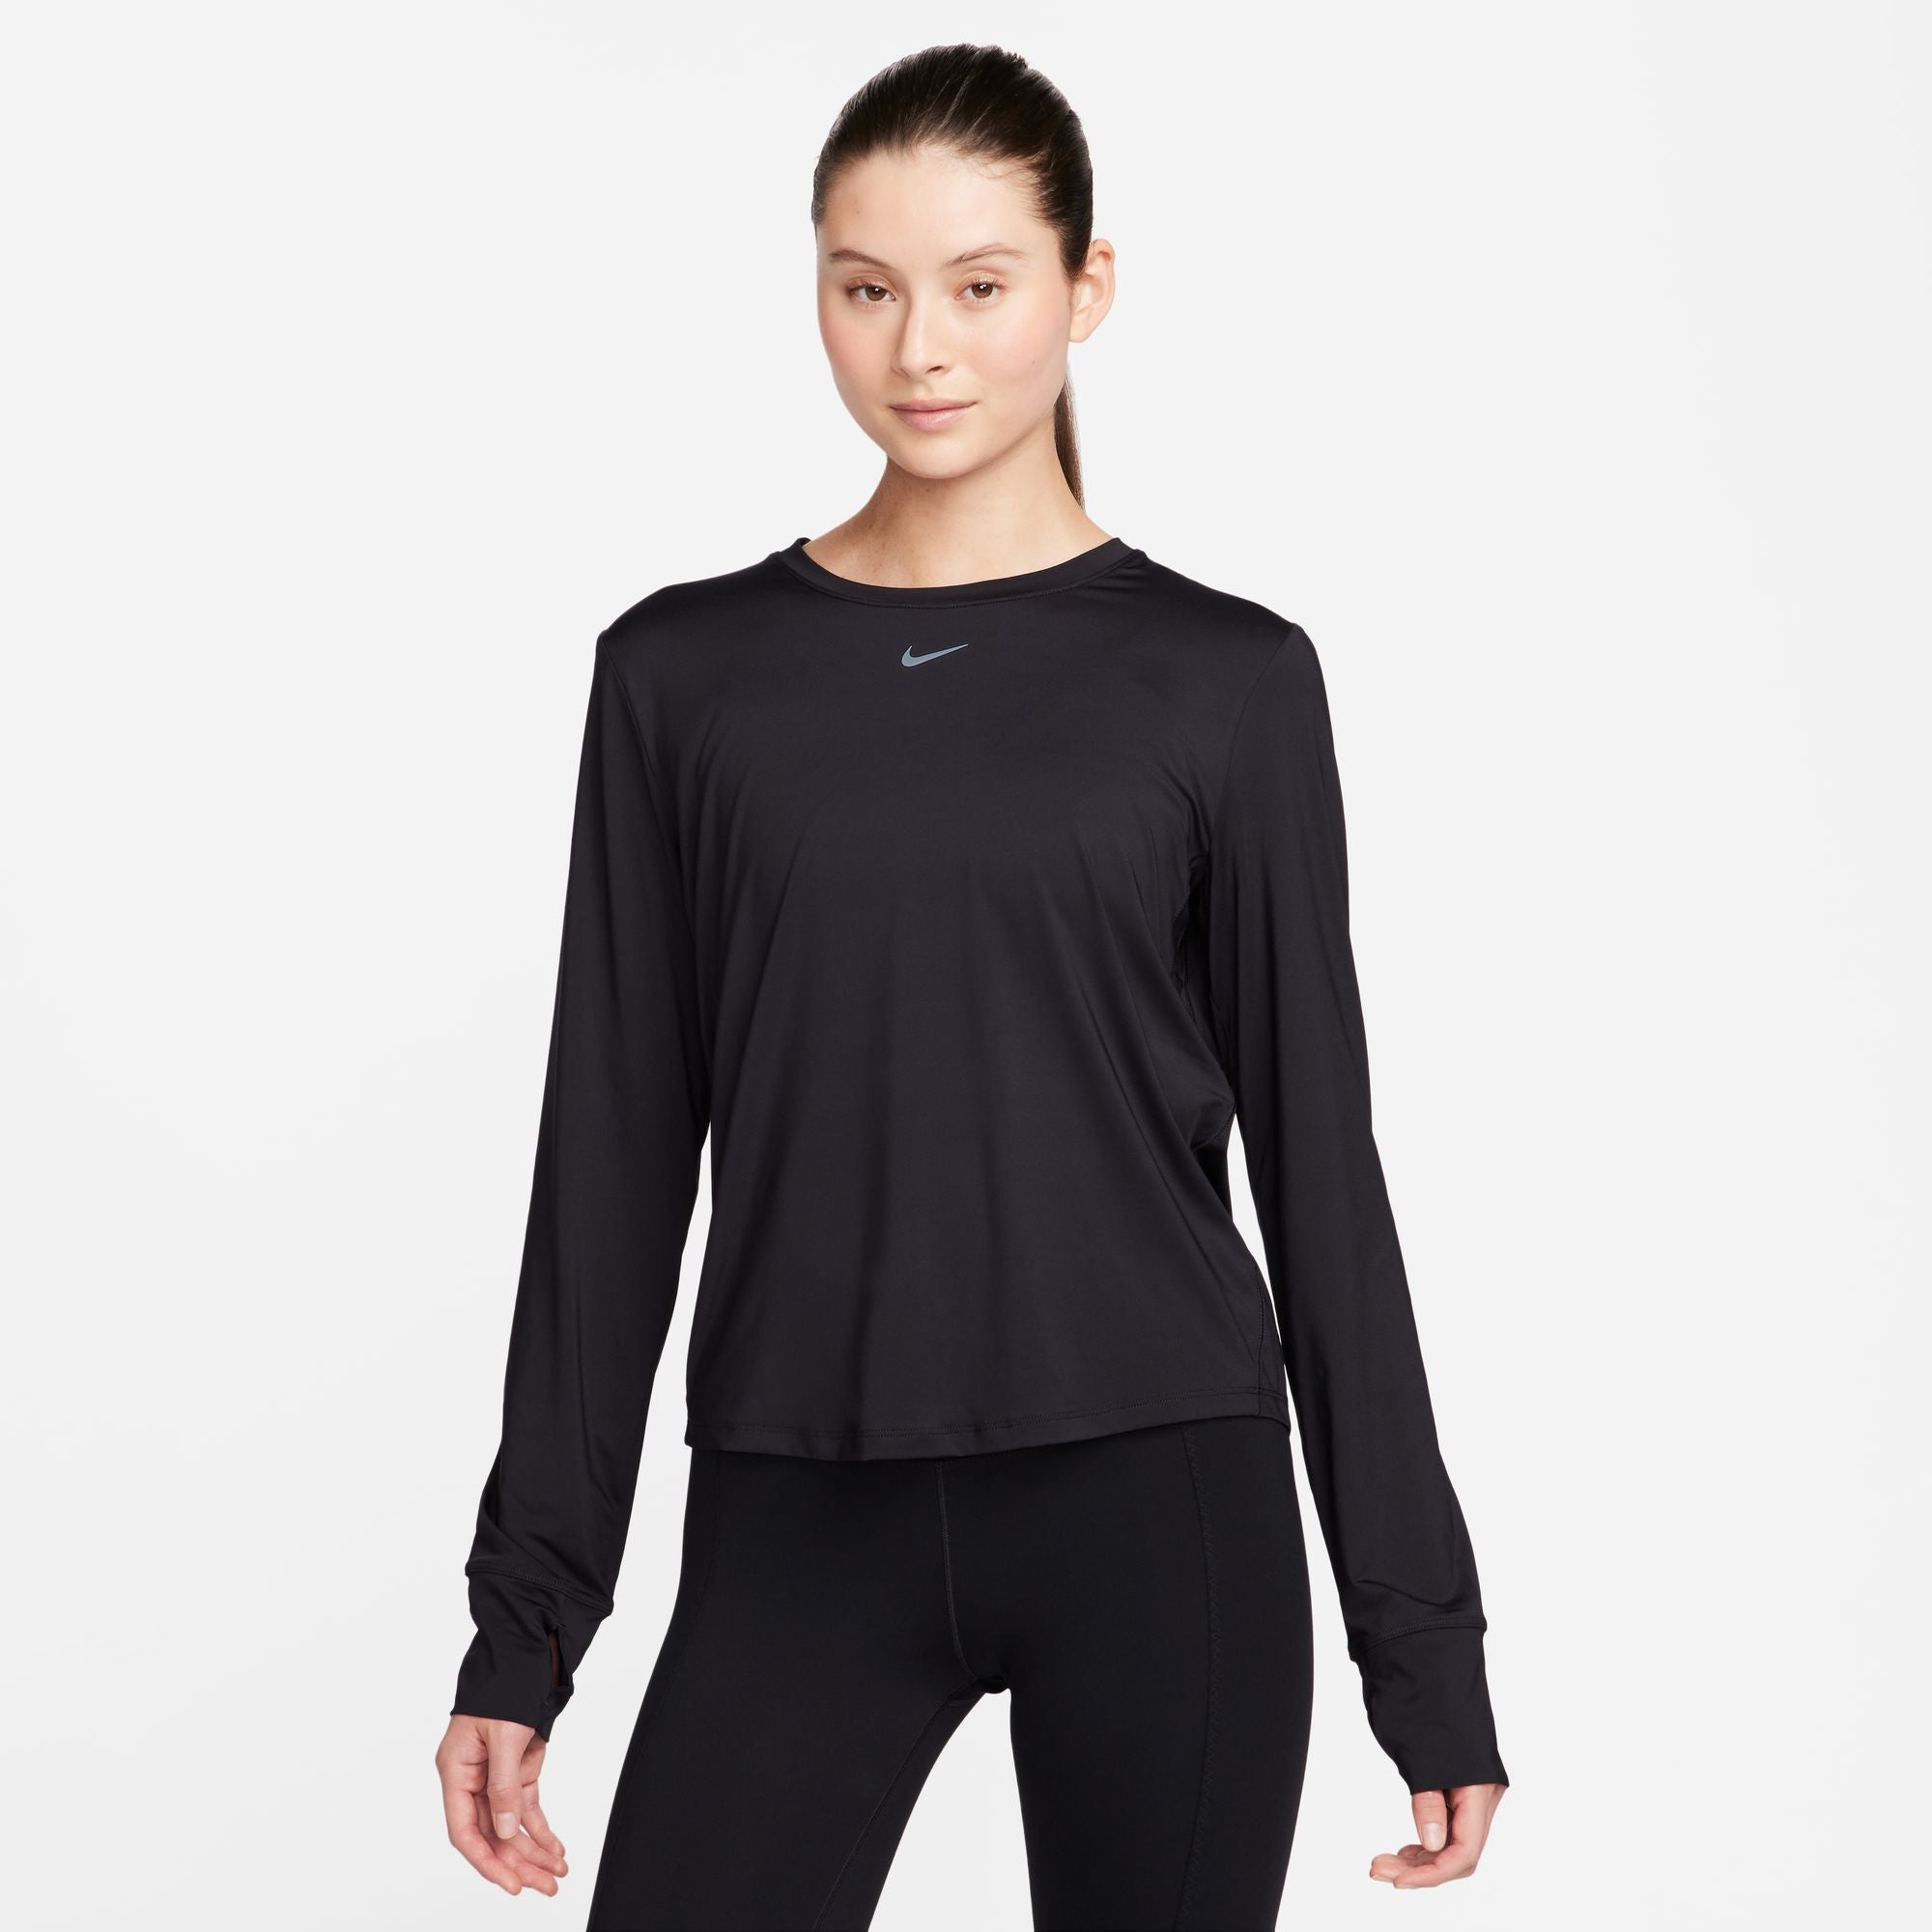 Nike Women's One Classic Dri-FIT Long-Sleeve Top, Medium, Black